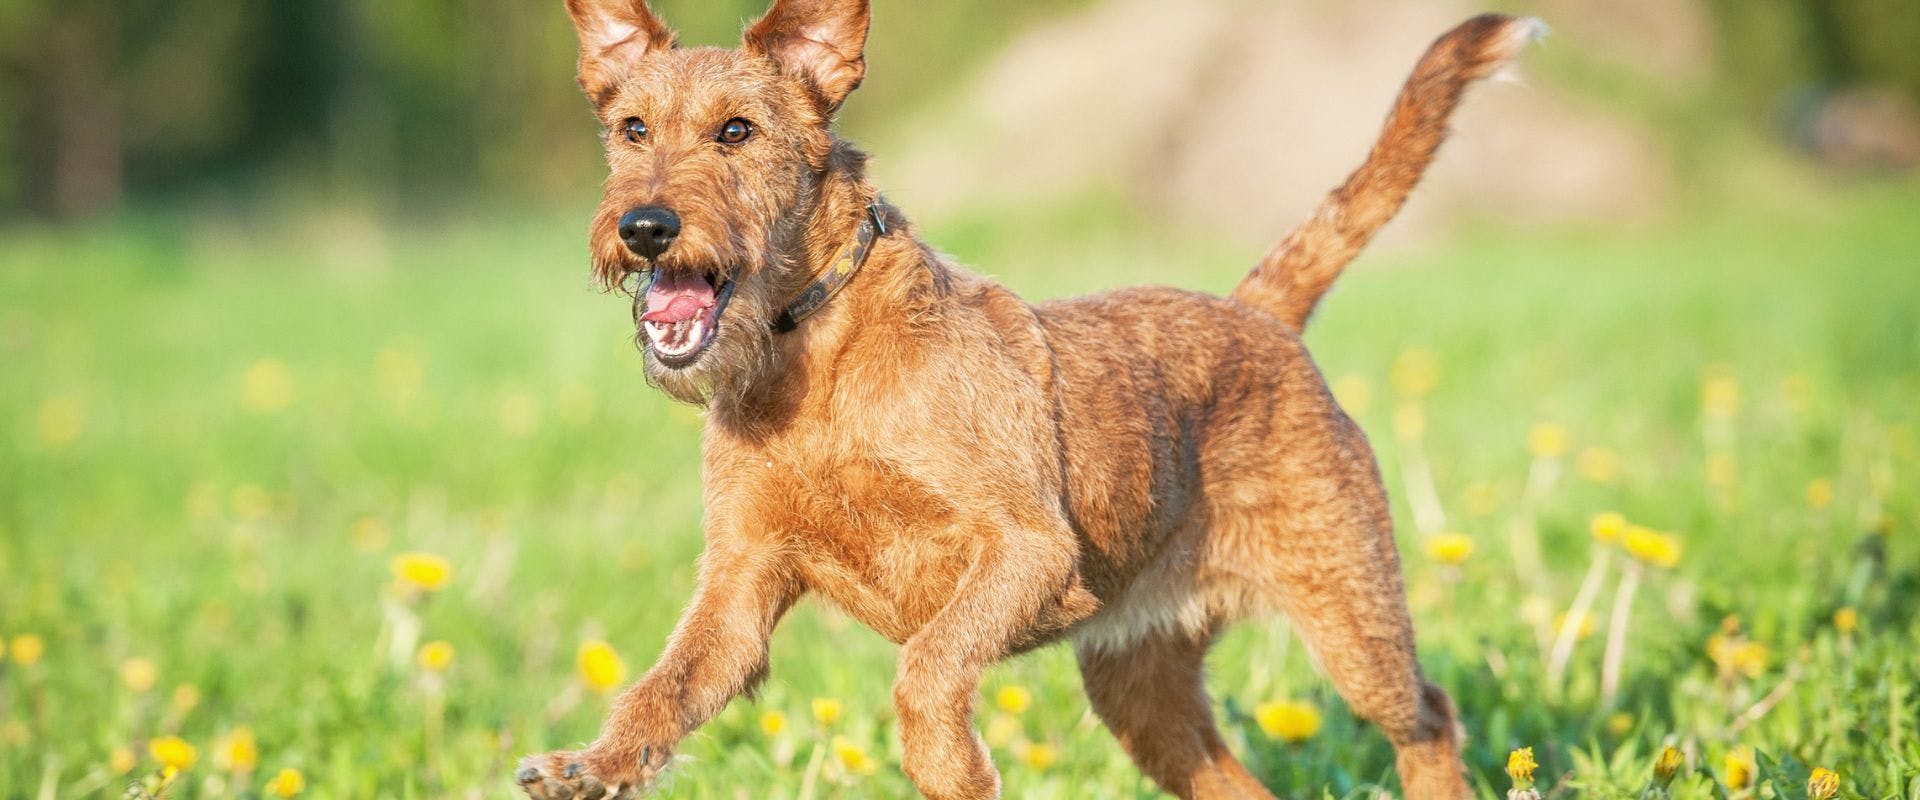 Irish Terrier dog playing outdoors